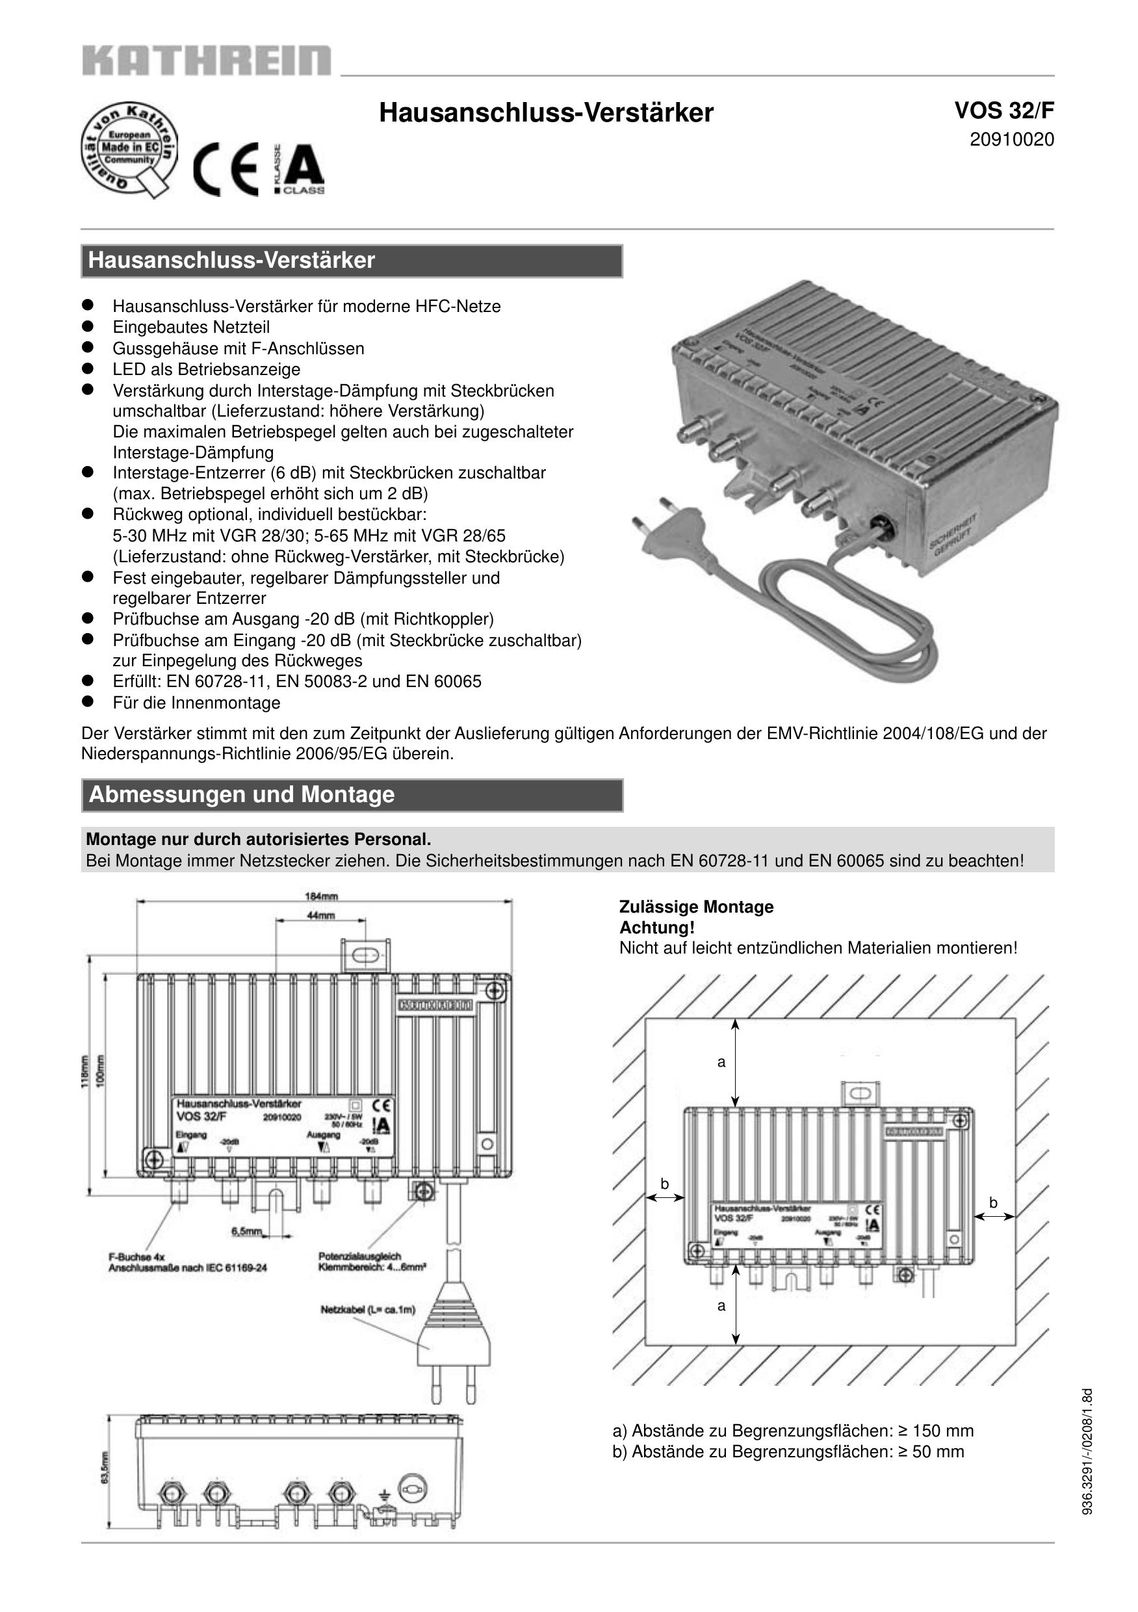 Kathrein 20910020 Car Amplifier User Manual